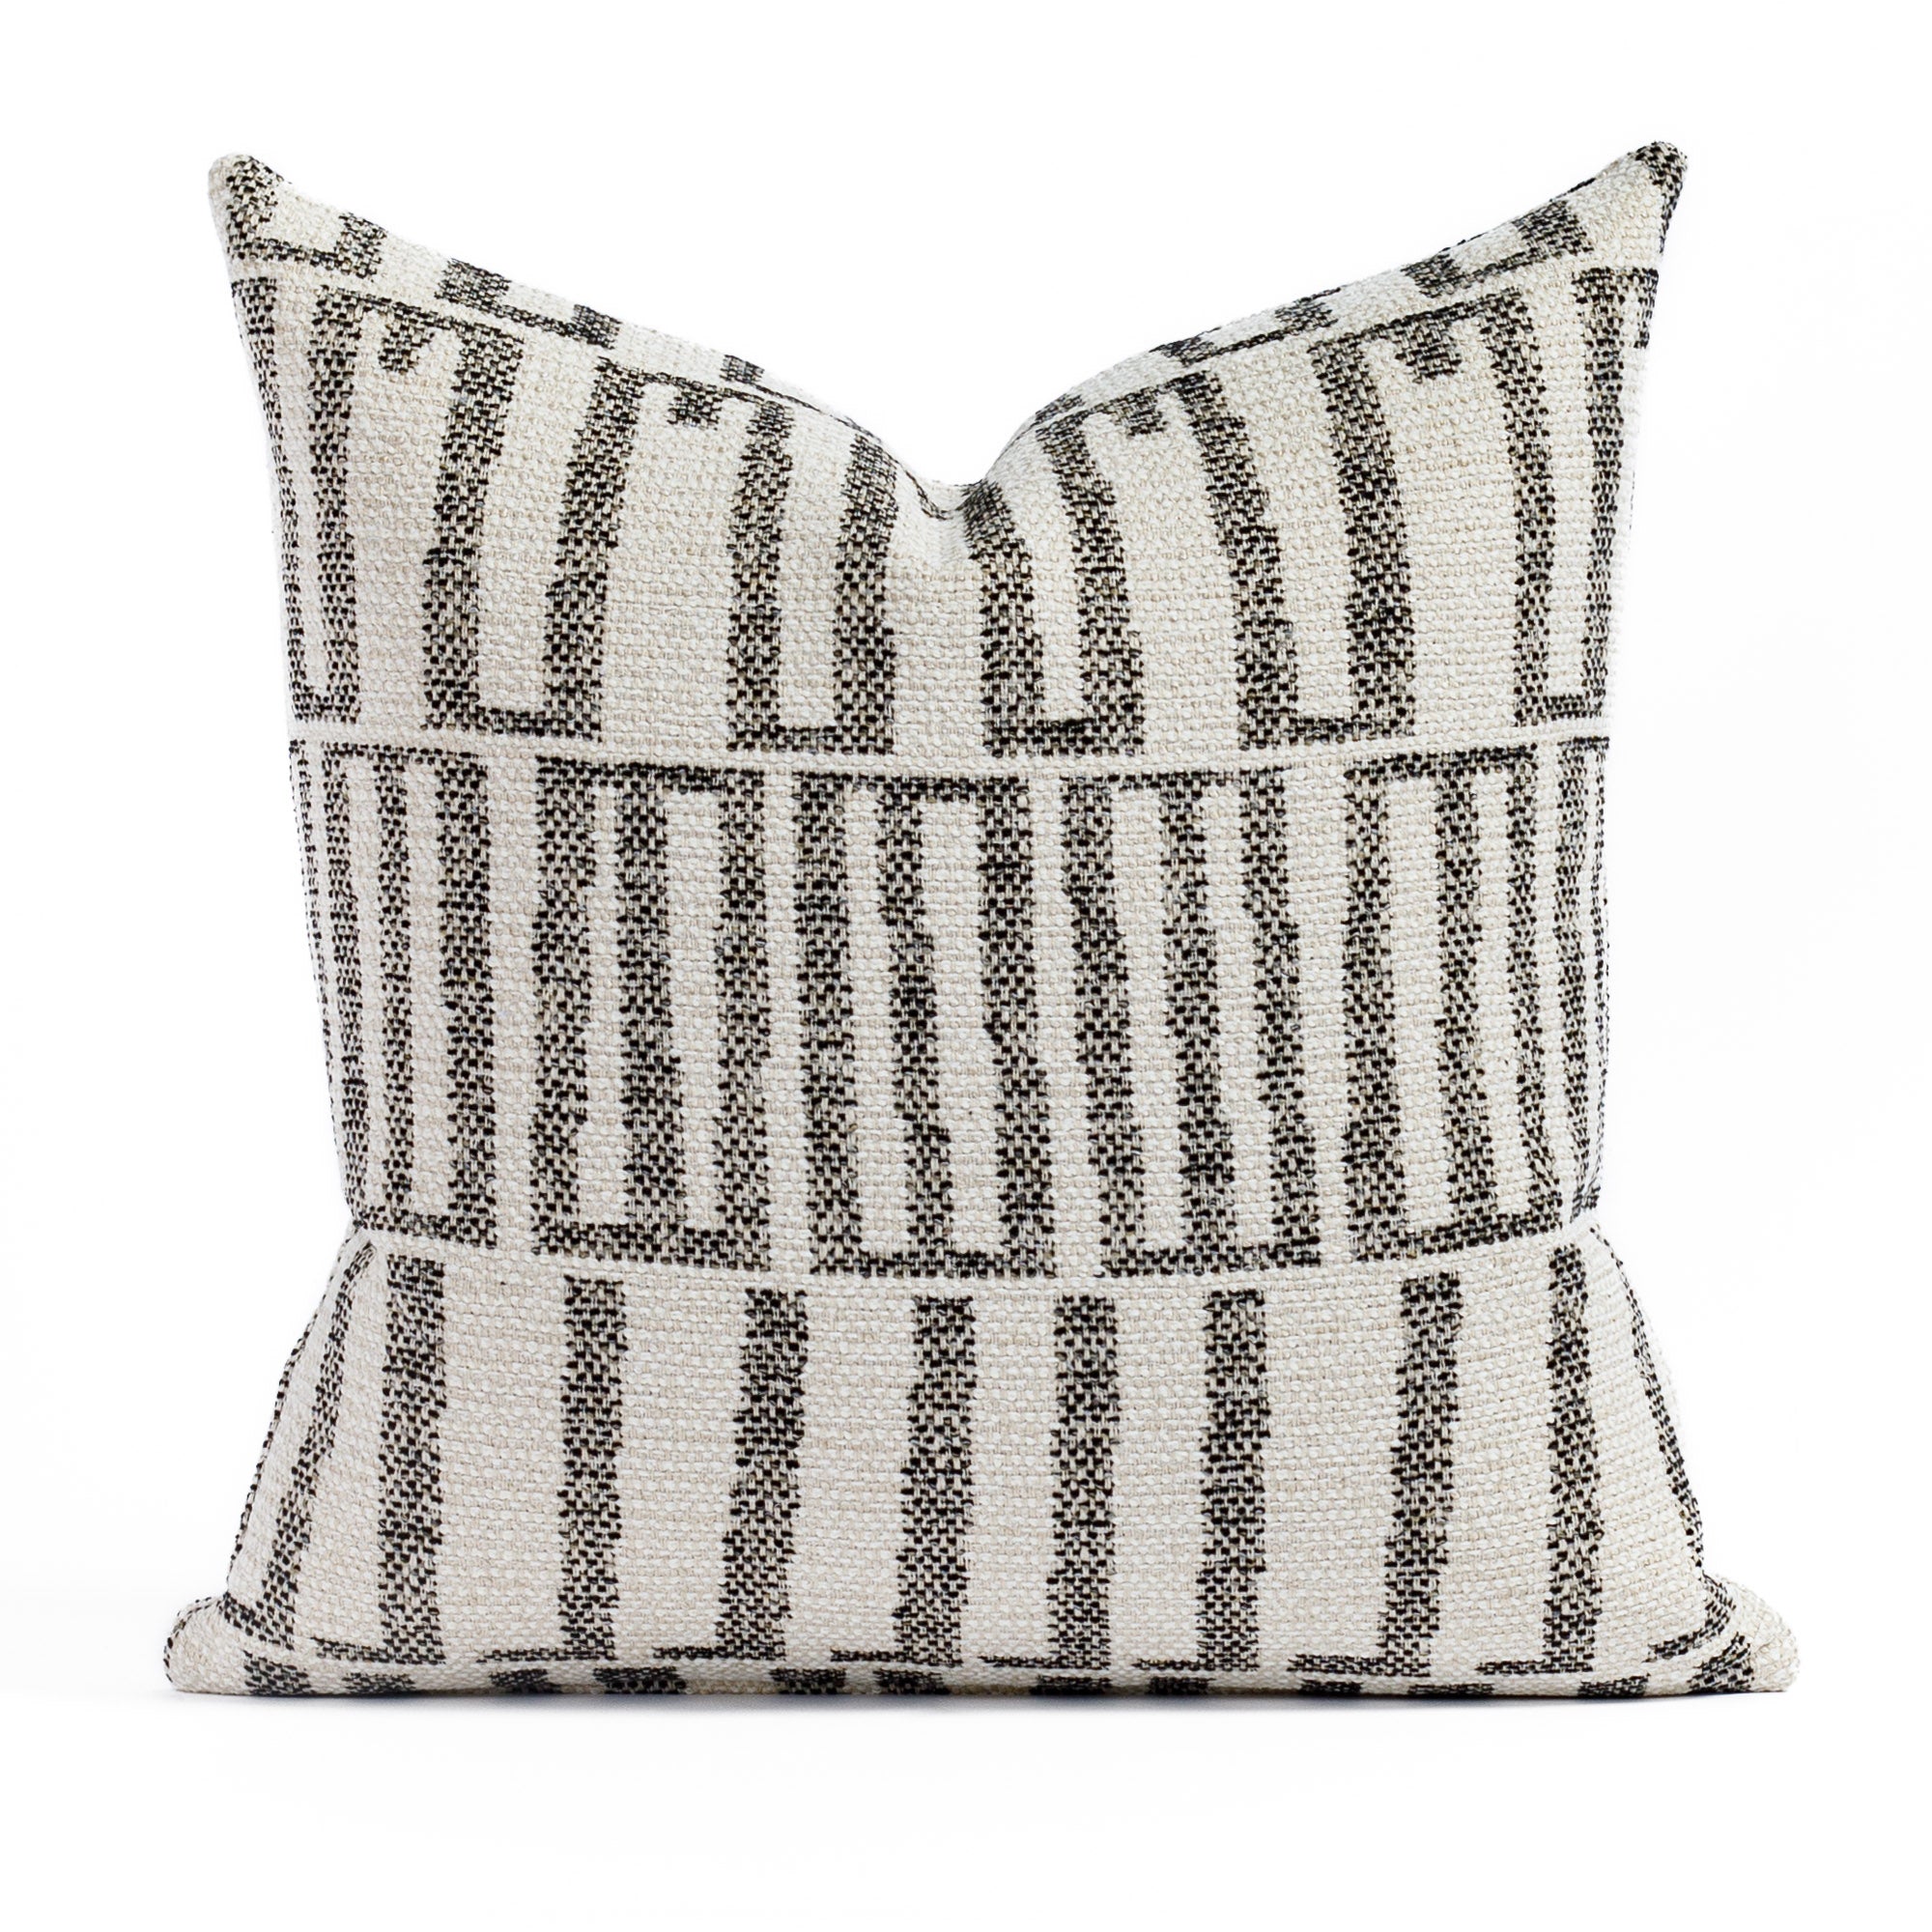 Mallia 20x20 Pillow Carbon, a cream and black organic geometric outdoor throw pillow